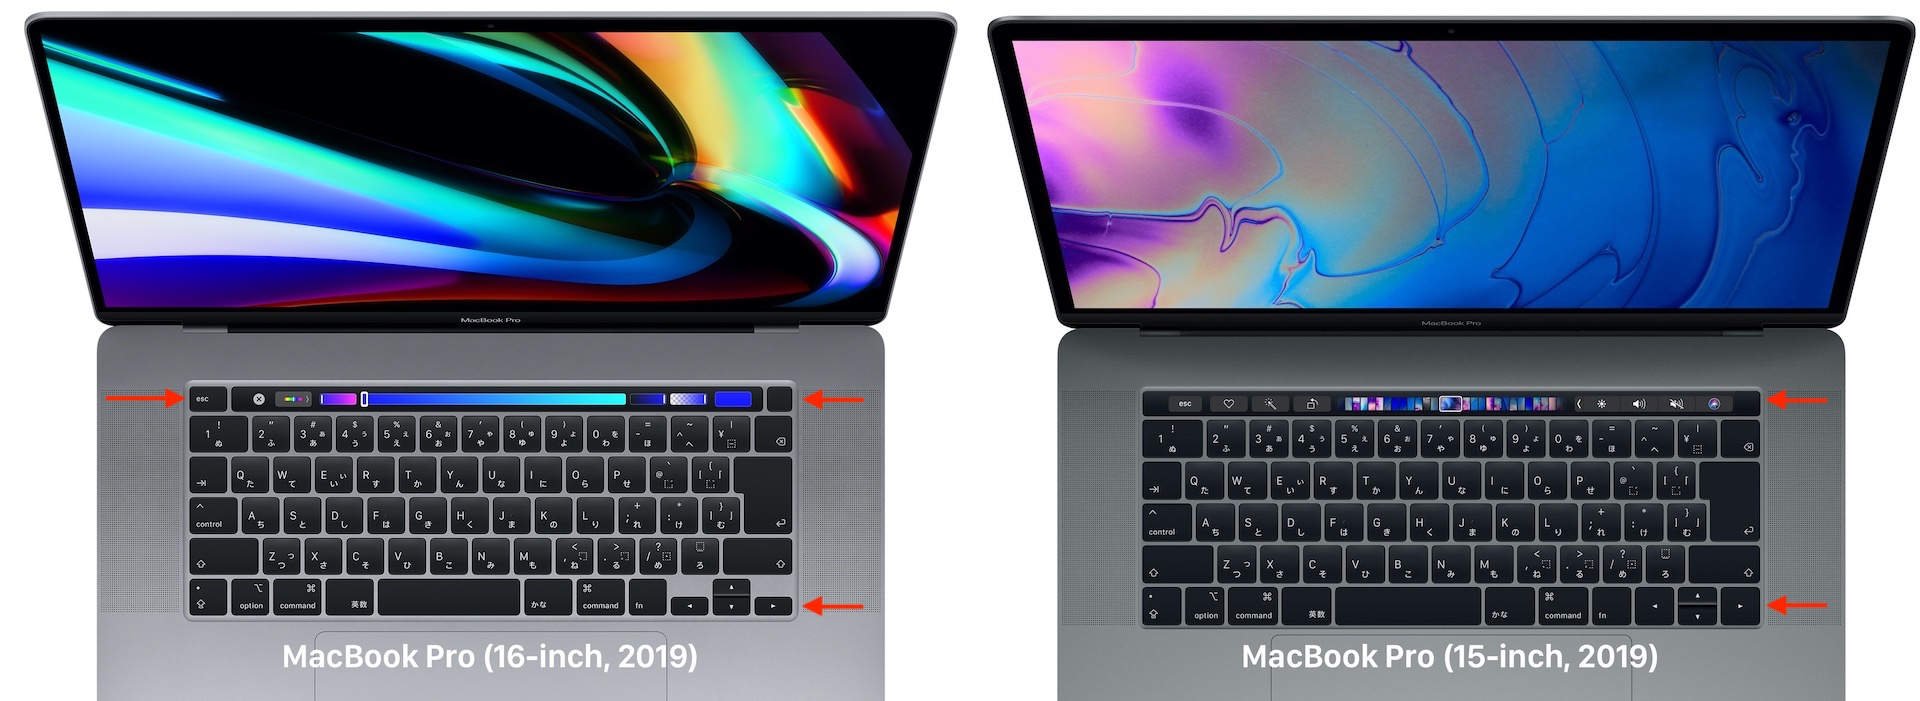 MacBook Pro (16-inch, 2019)のキートップ